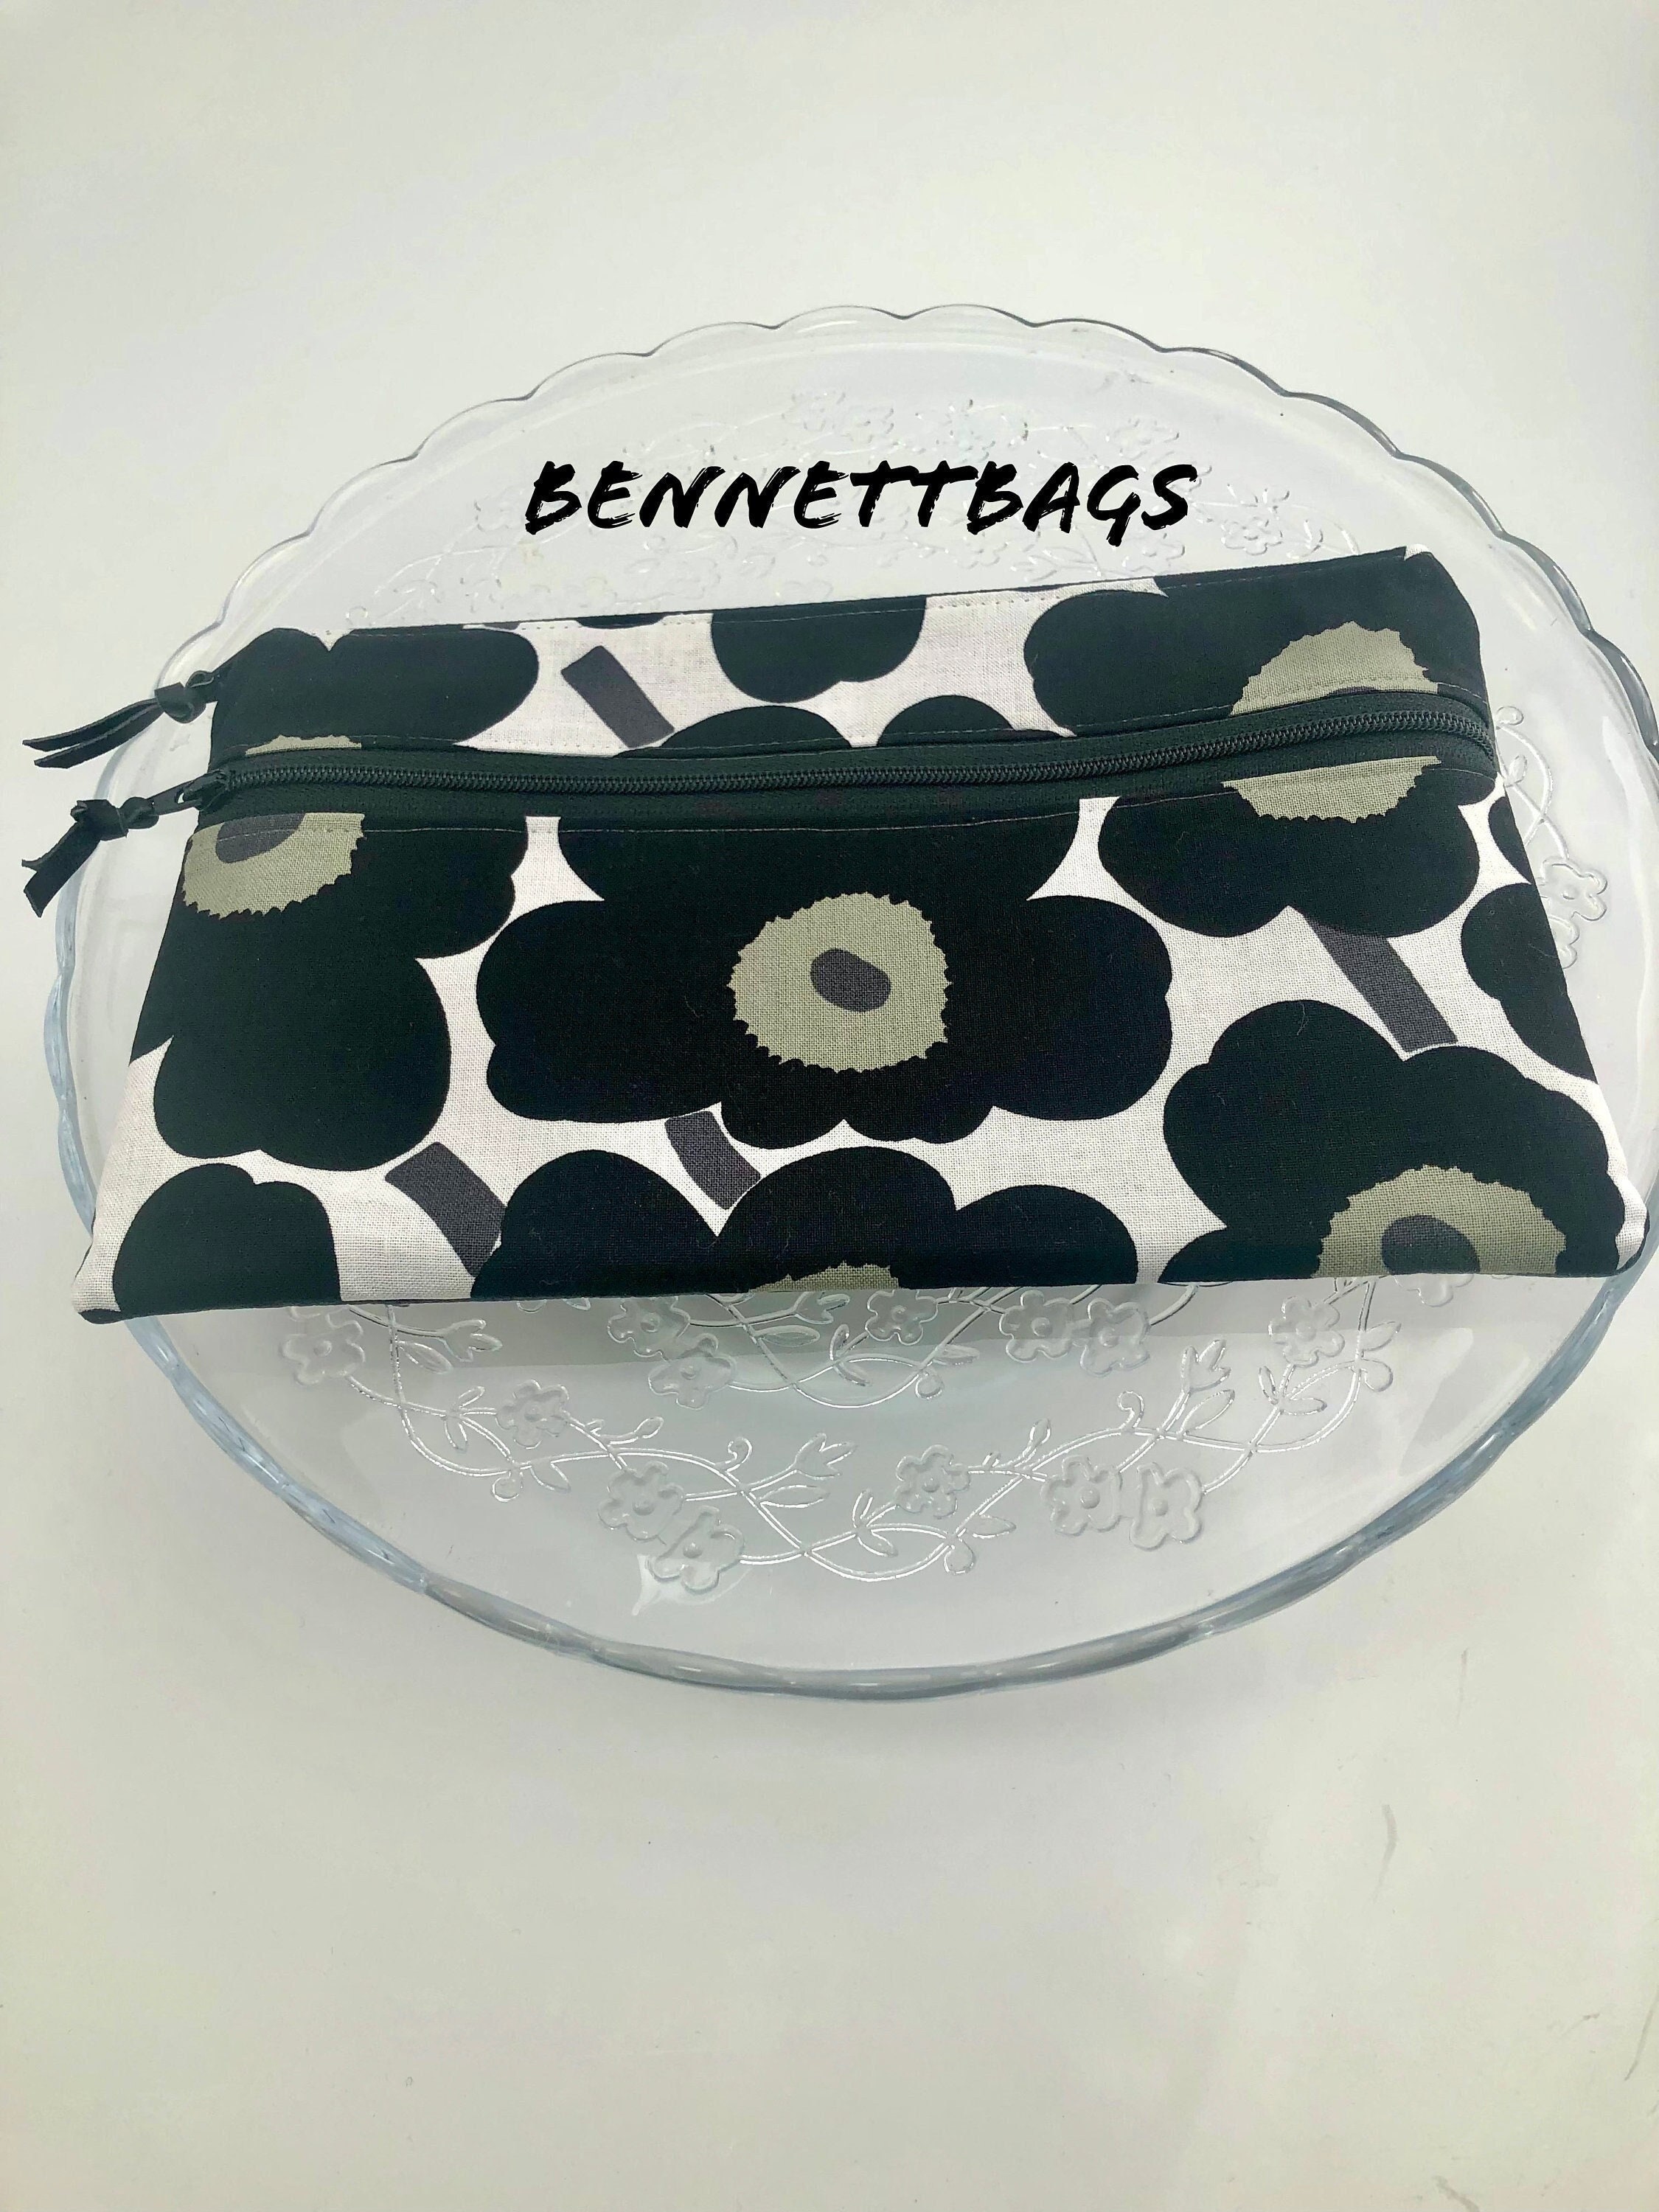 Home and Travel Bag Marimekko Fabric Lover Versatile Pouch by BennetBags Travel Gift Marimekko Fabric Two Zipper Bag Tassen & portemonnees Bagage & Reizen Reisportefeuilles Adaptable Pouch 